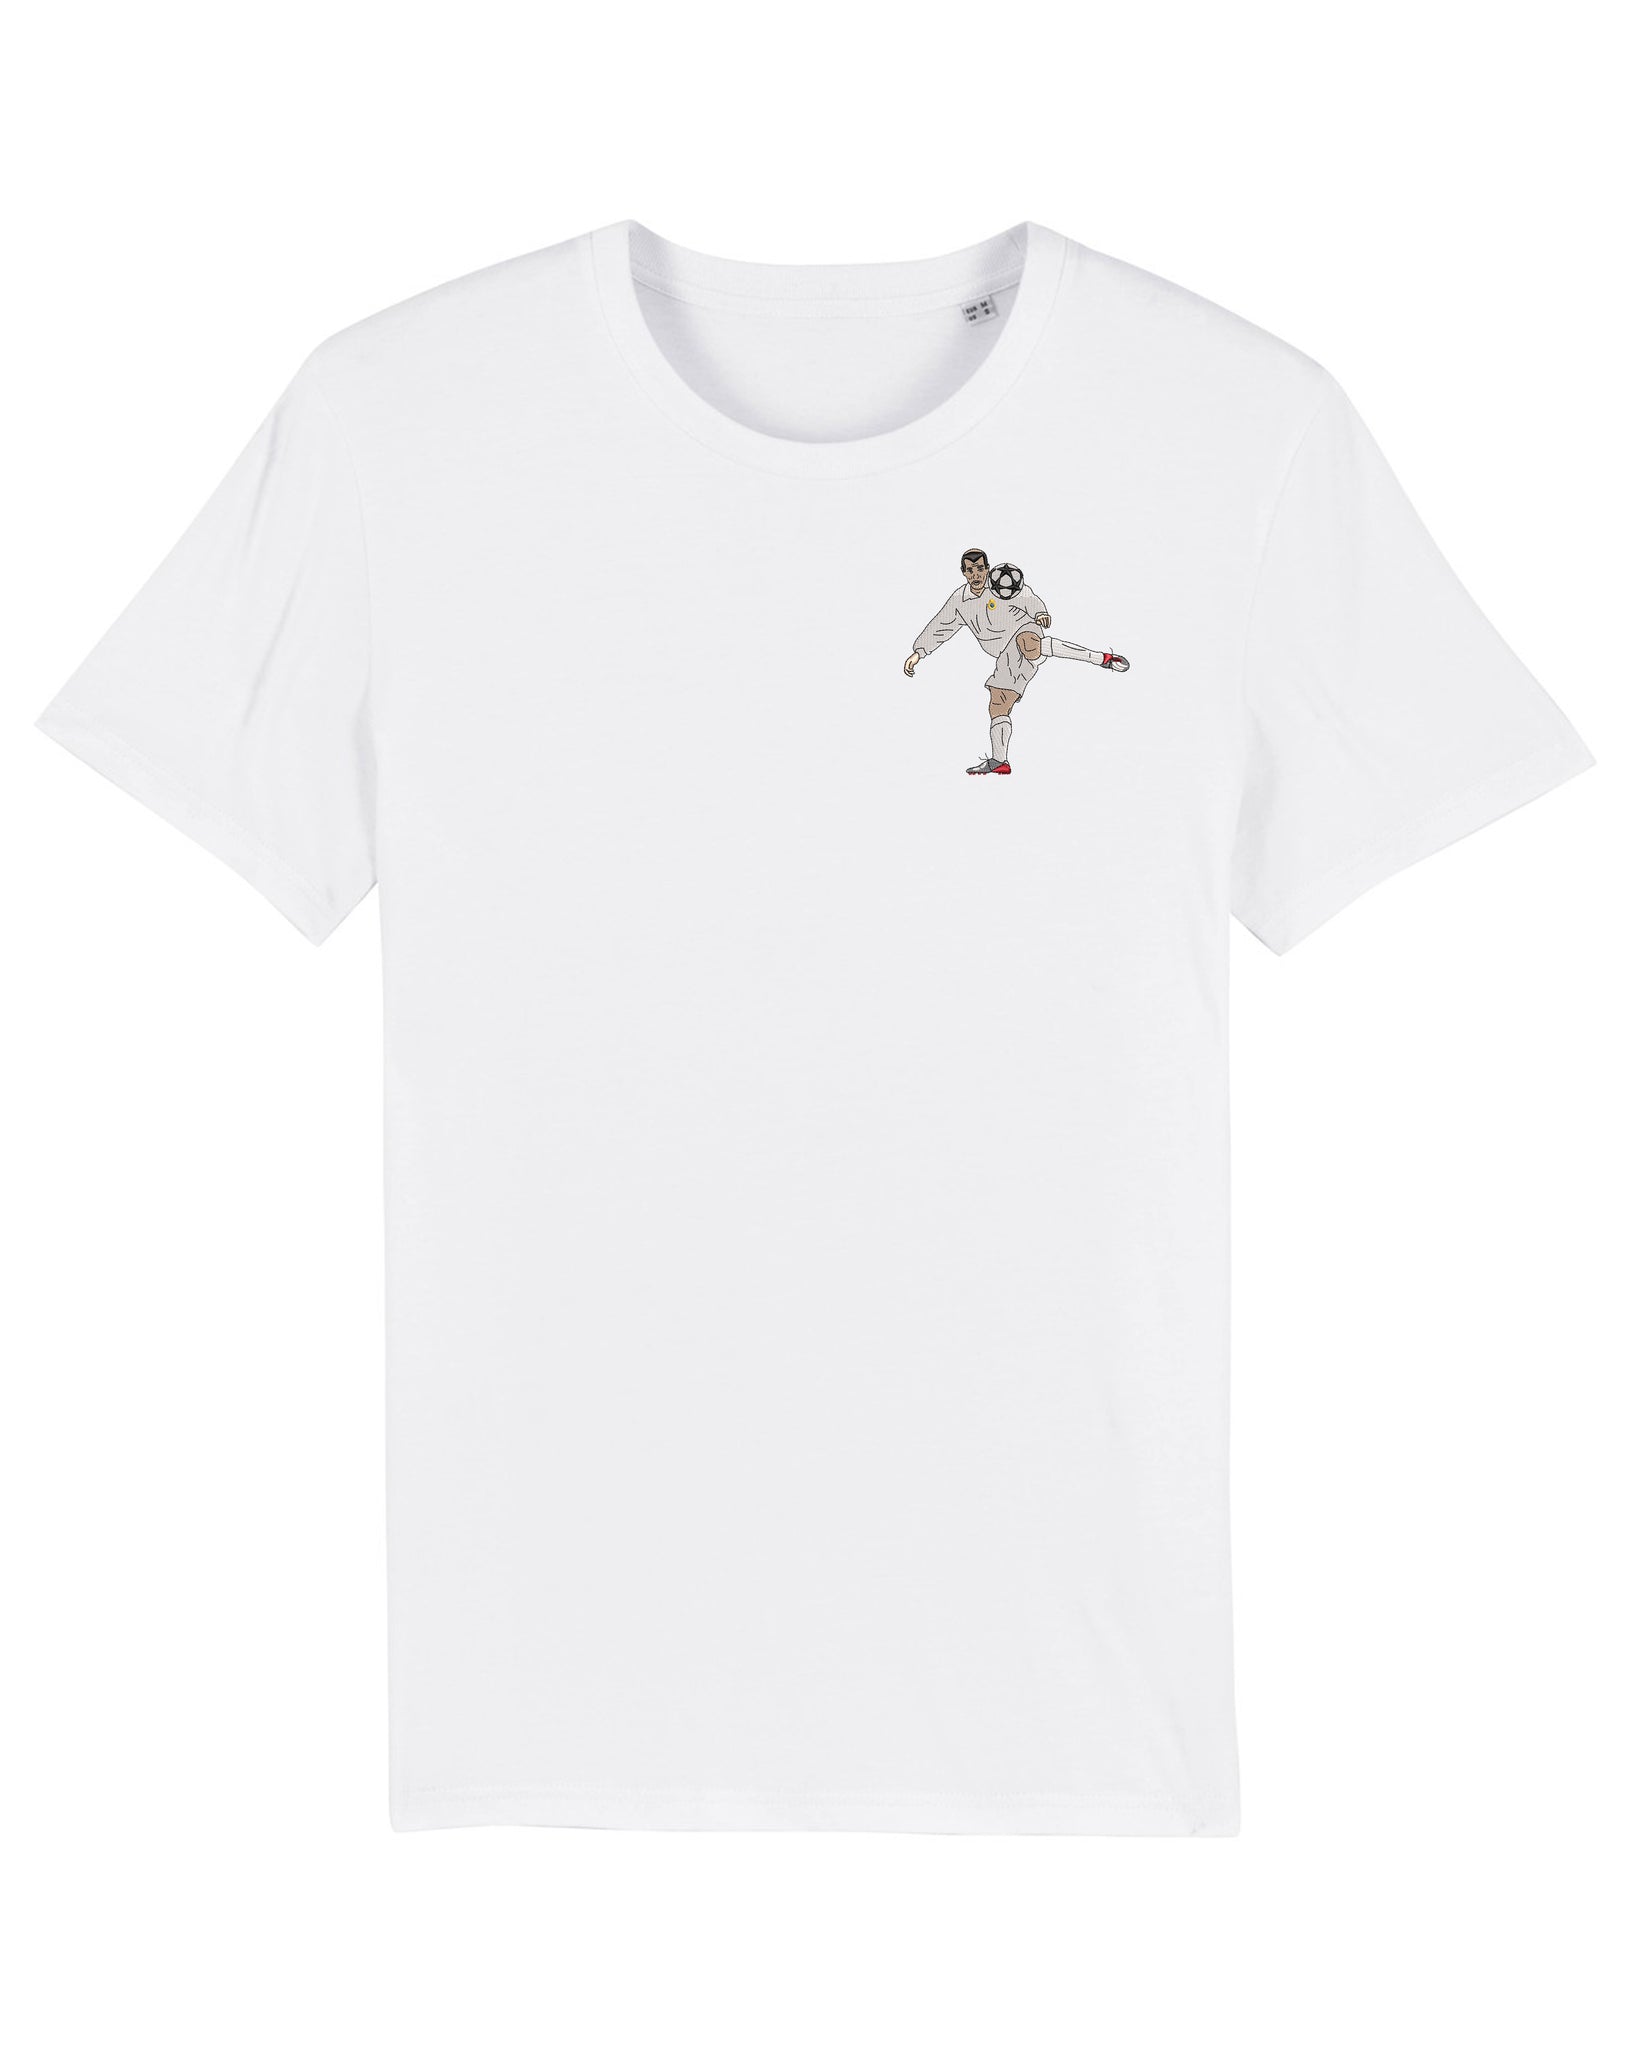 Zizou Madrid Embroidered Tee Shirt